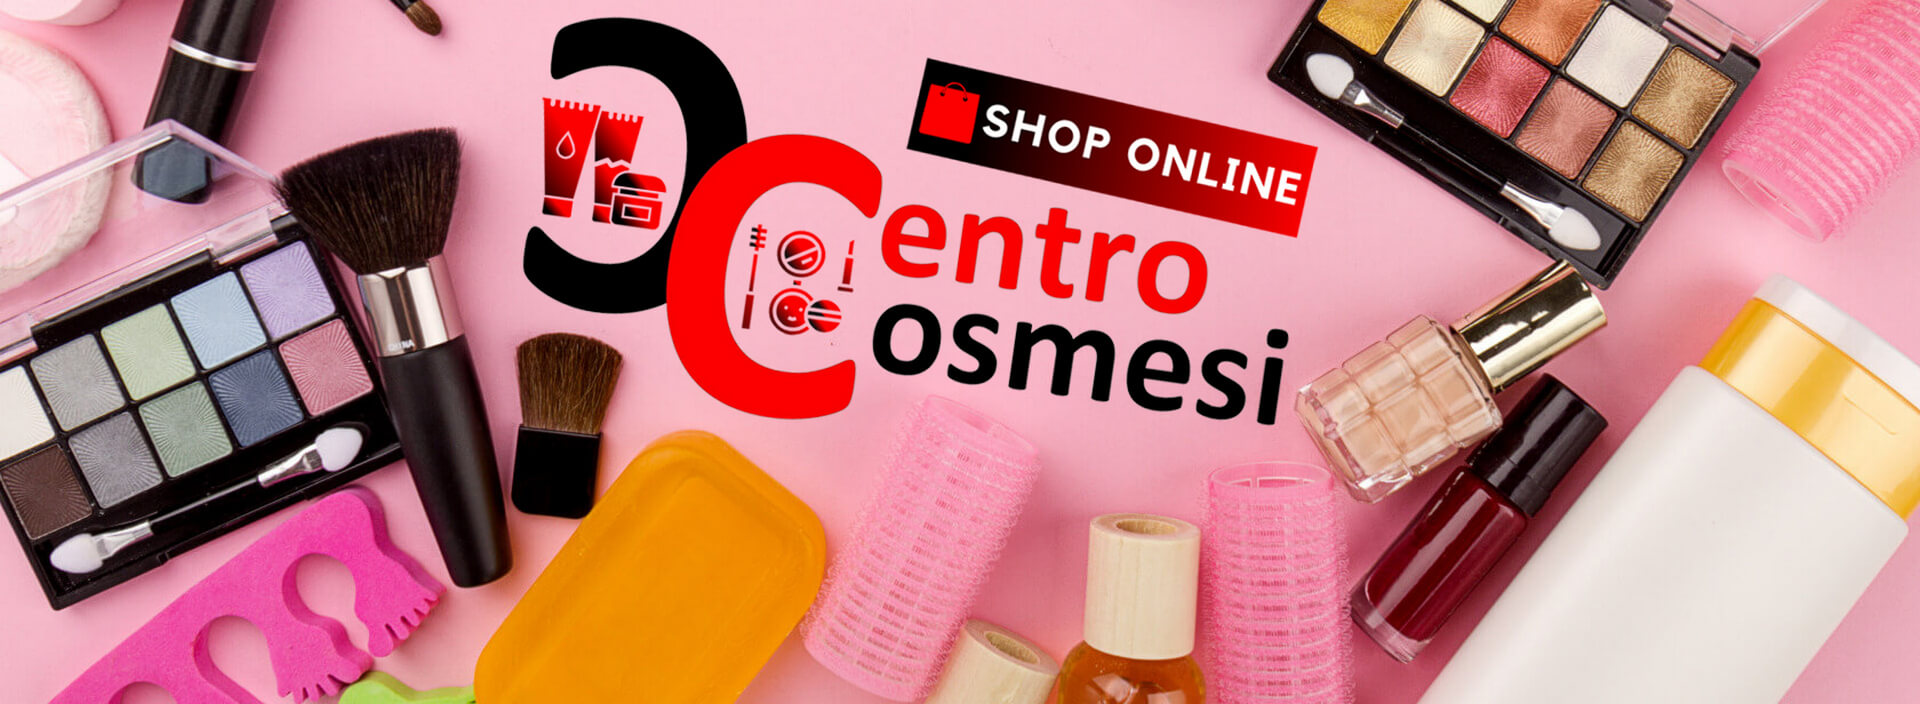 Centro Cosmesi - Shop Online